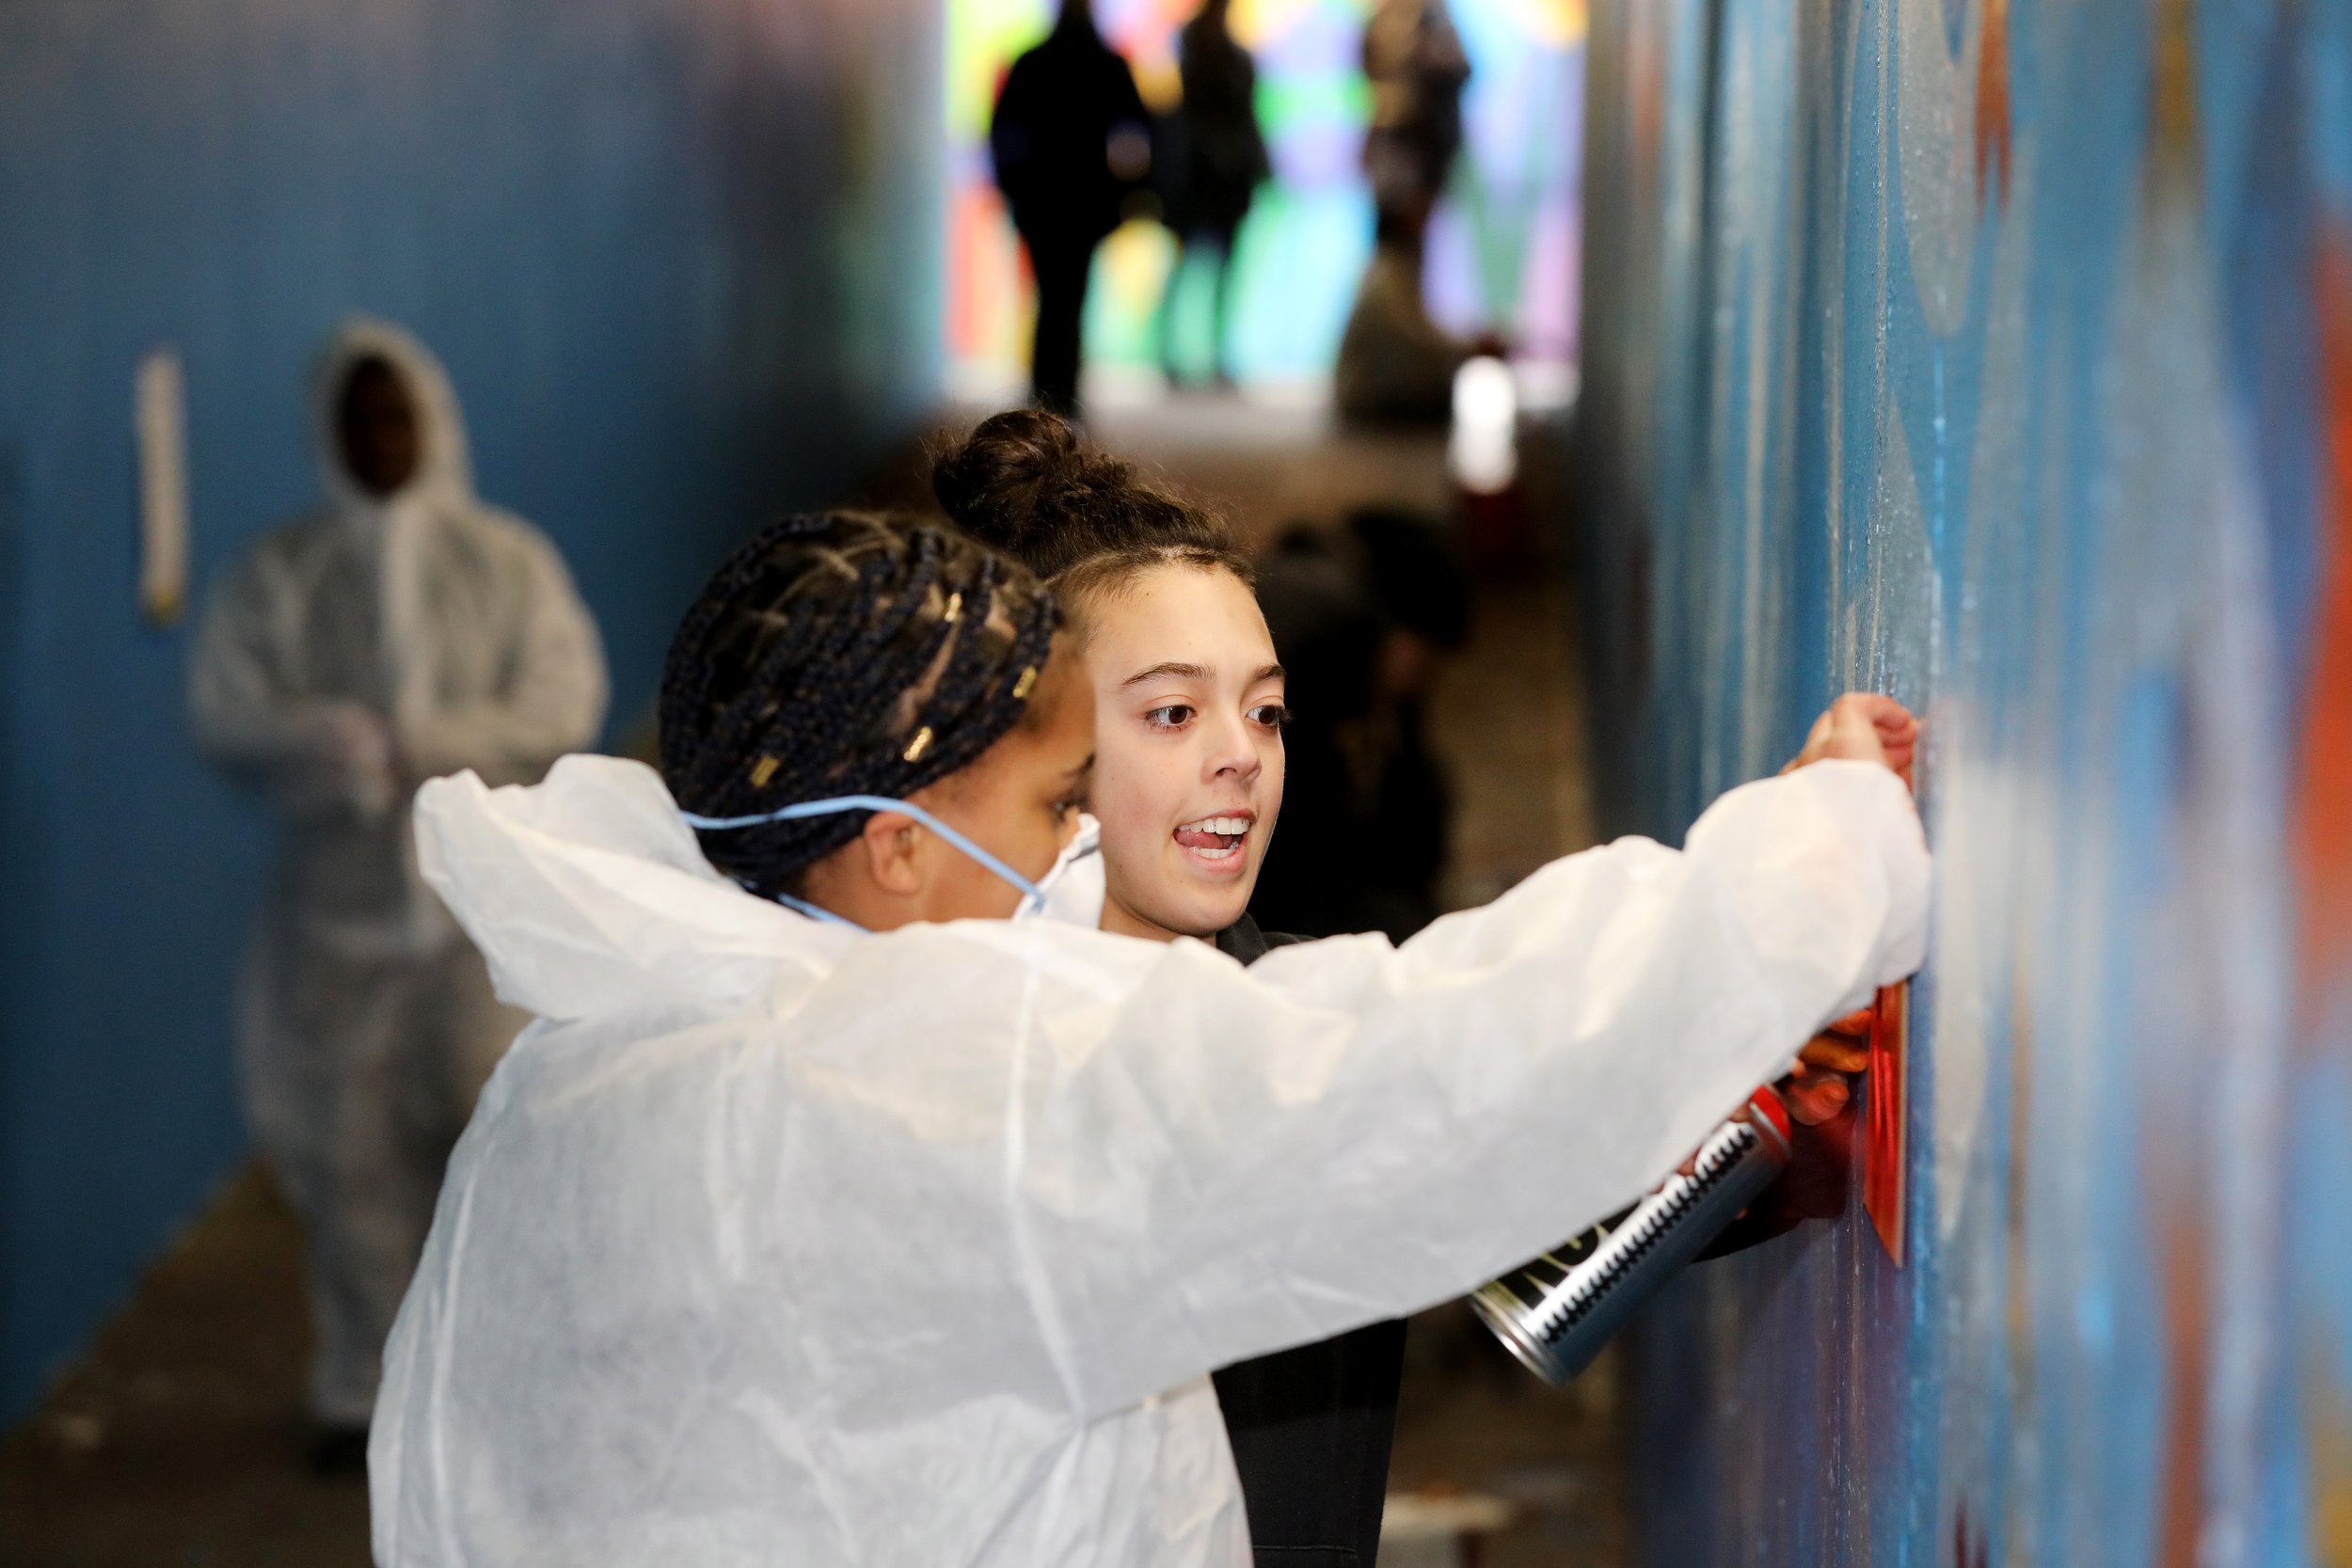 Baca Students enjoying trying spray paint